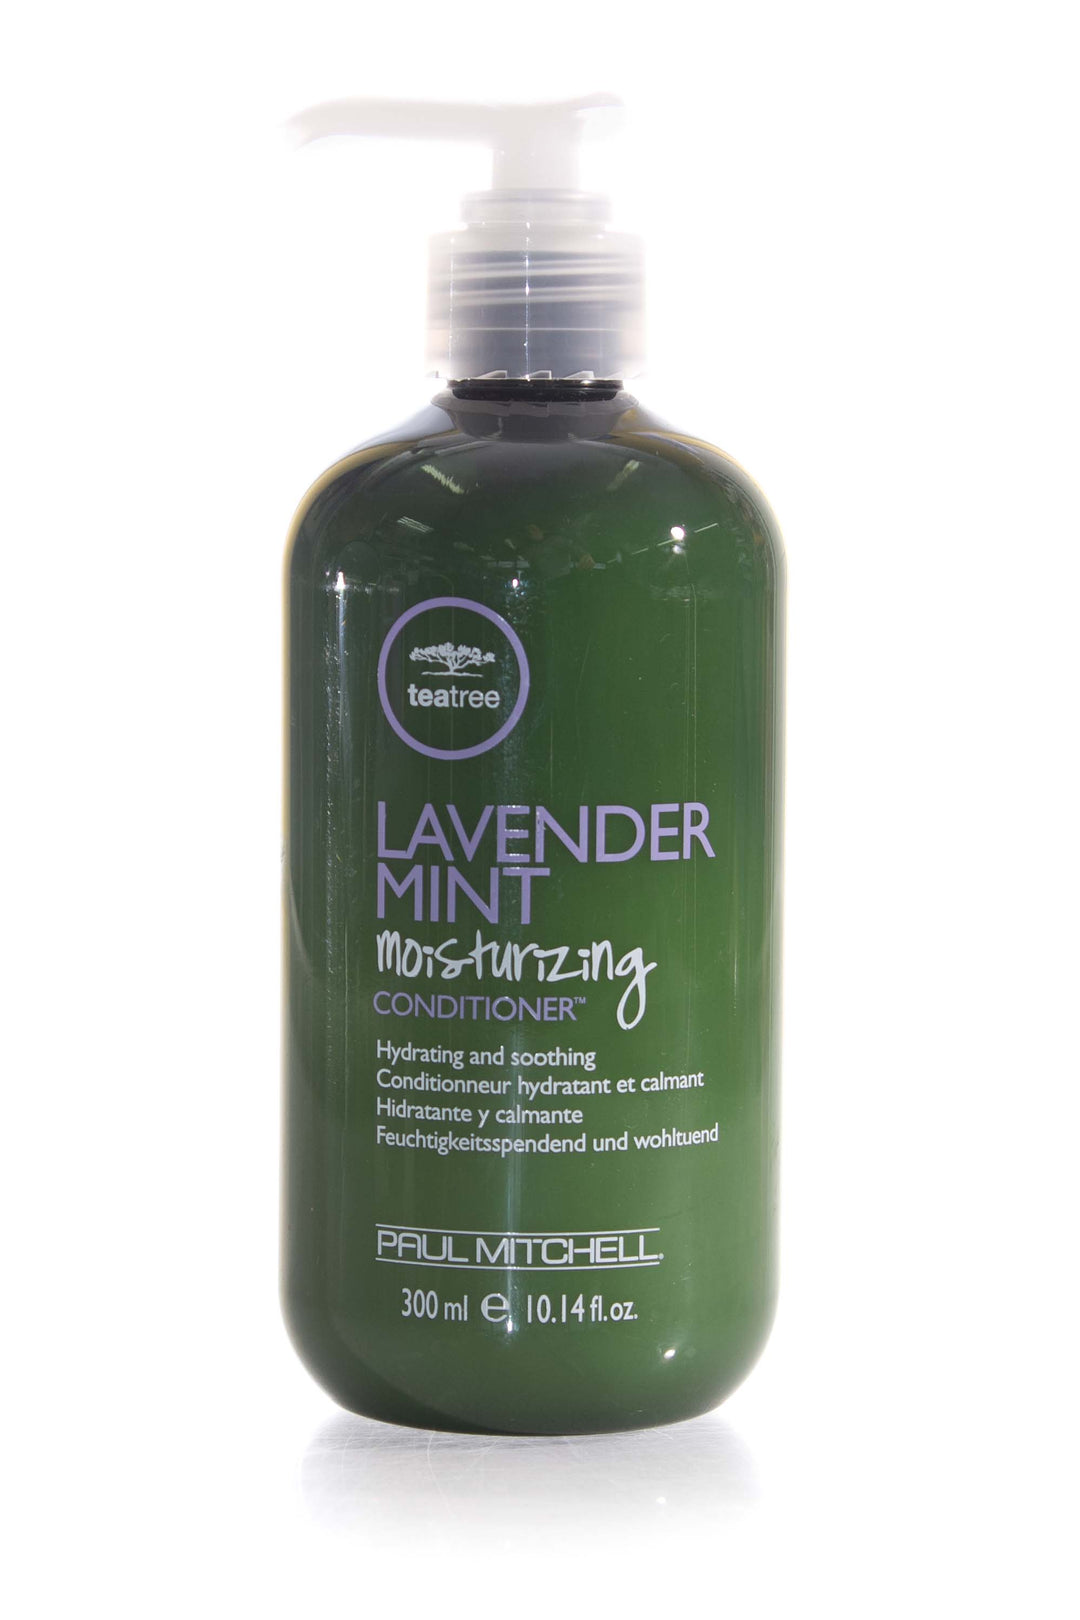 paul-mitchell-tea-tree-lavender-mint-moisturizing-conditioner-300ml